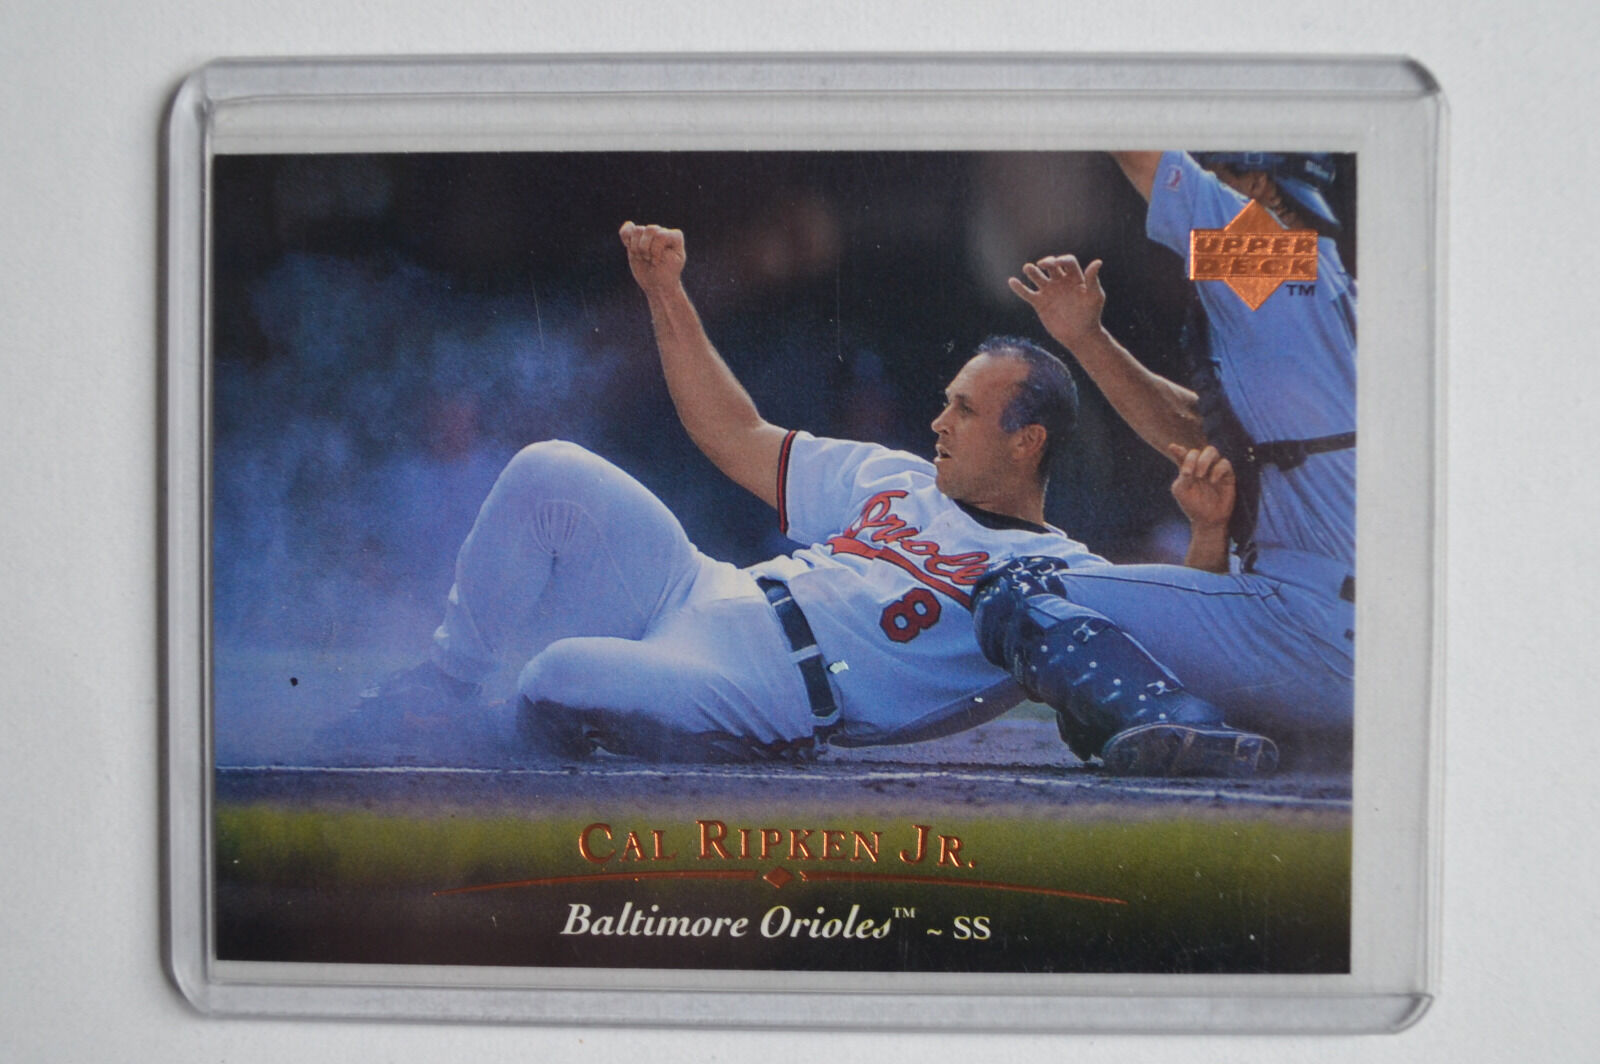 Cal Ripken JR 1995 Upper Deck card #365 Baltimore Orioles